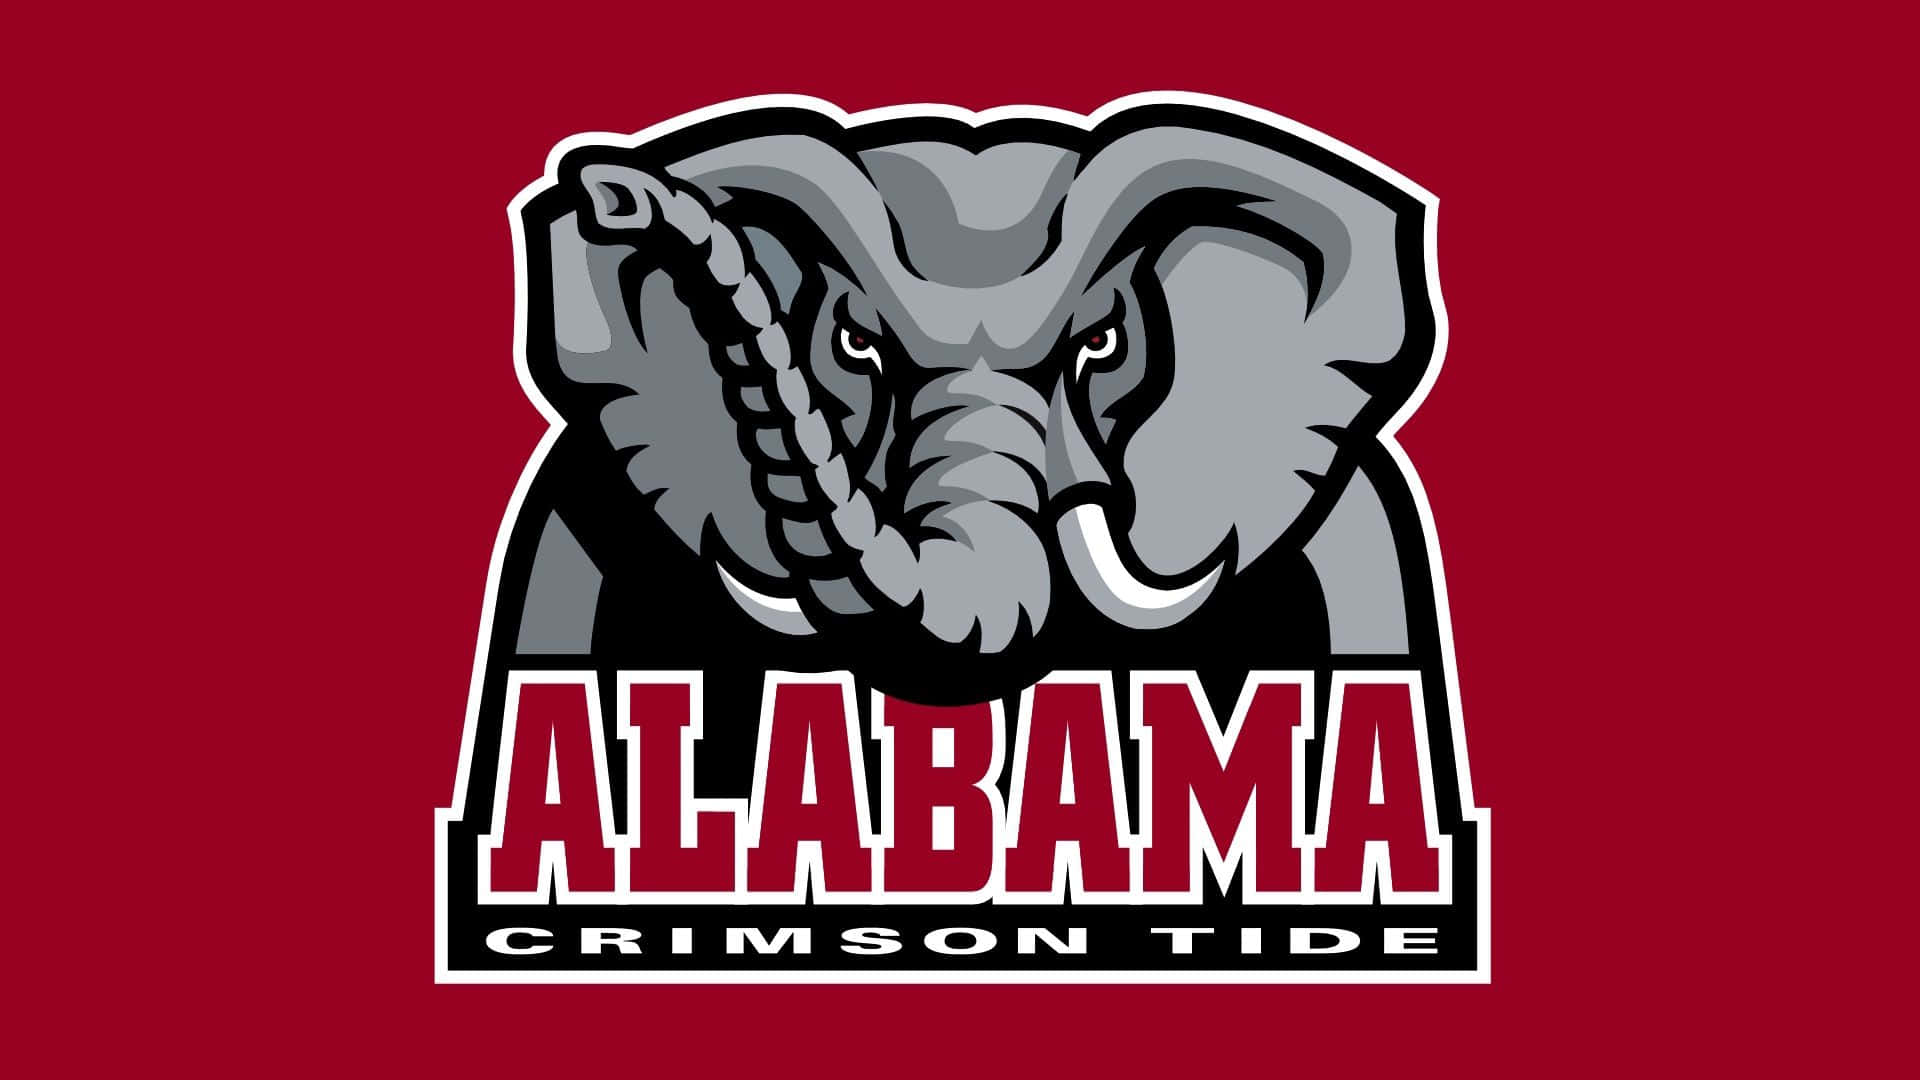 Creative Alabama Football Team Mascot Digital Art Background